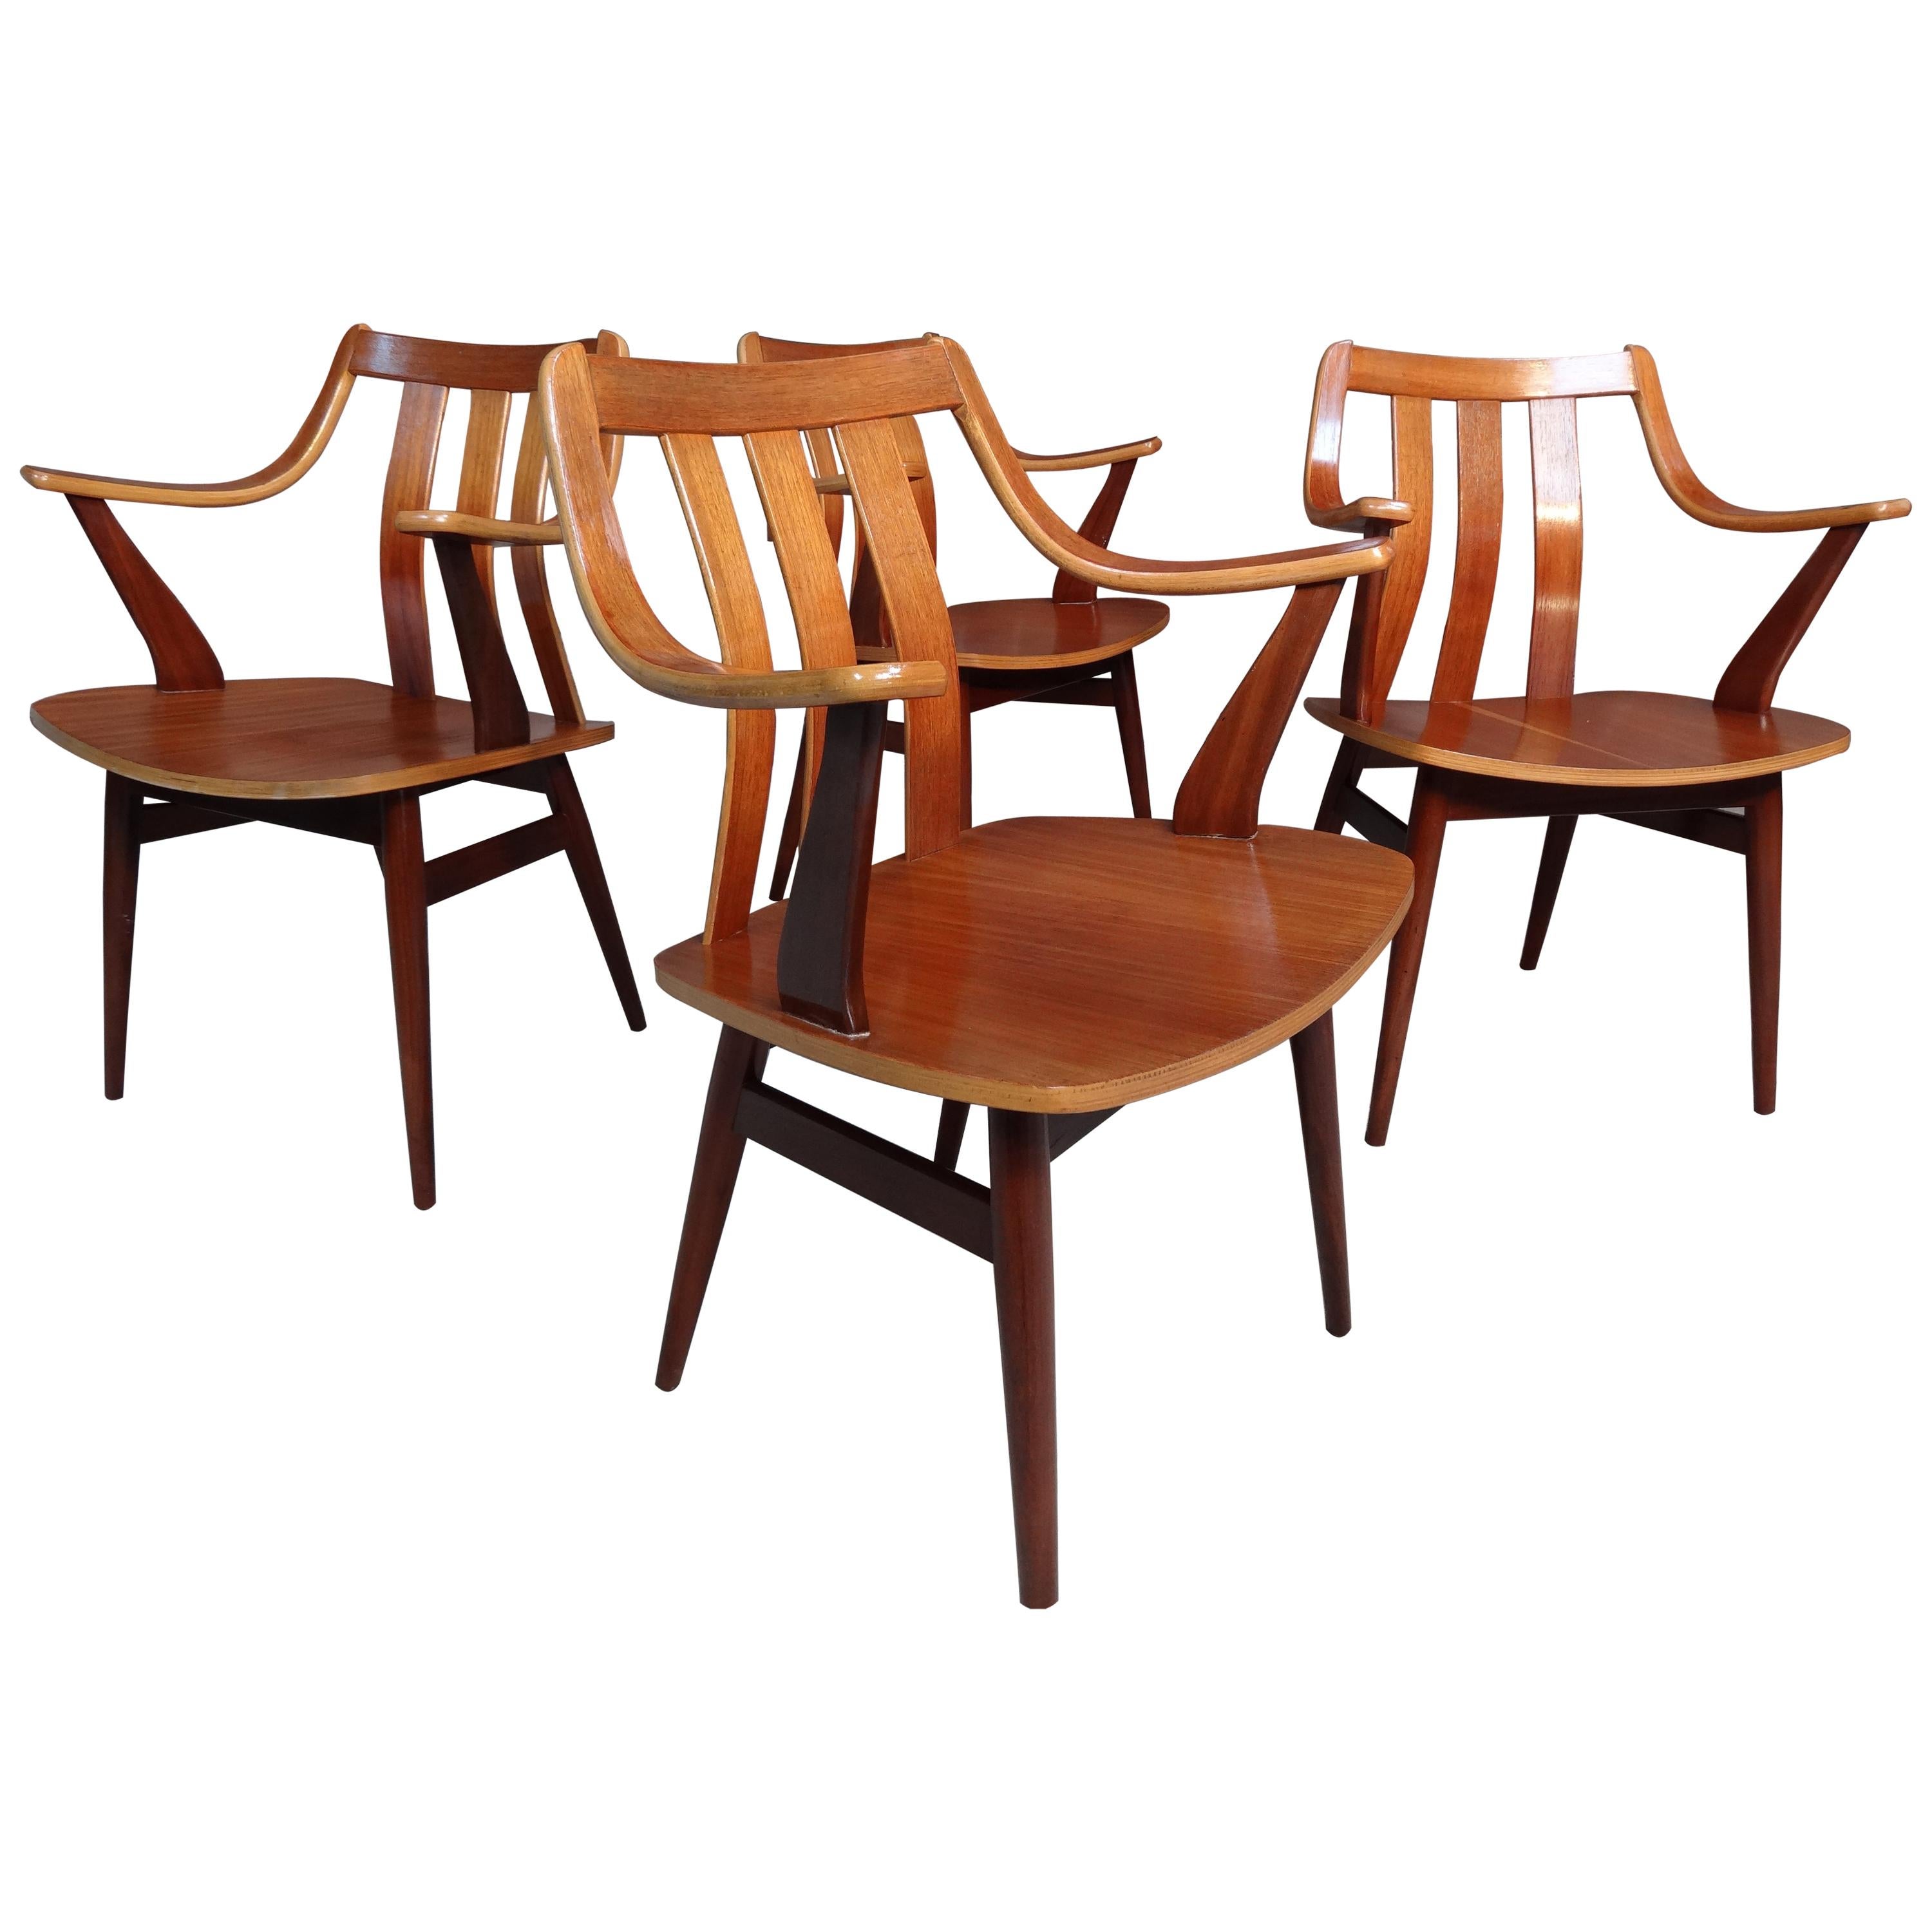 Stunning Set of 4 Vintage Retro 1960's Organic Teak Dining Chairs